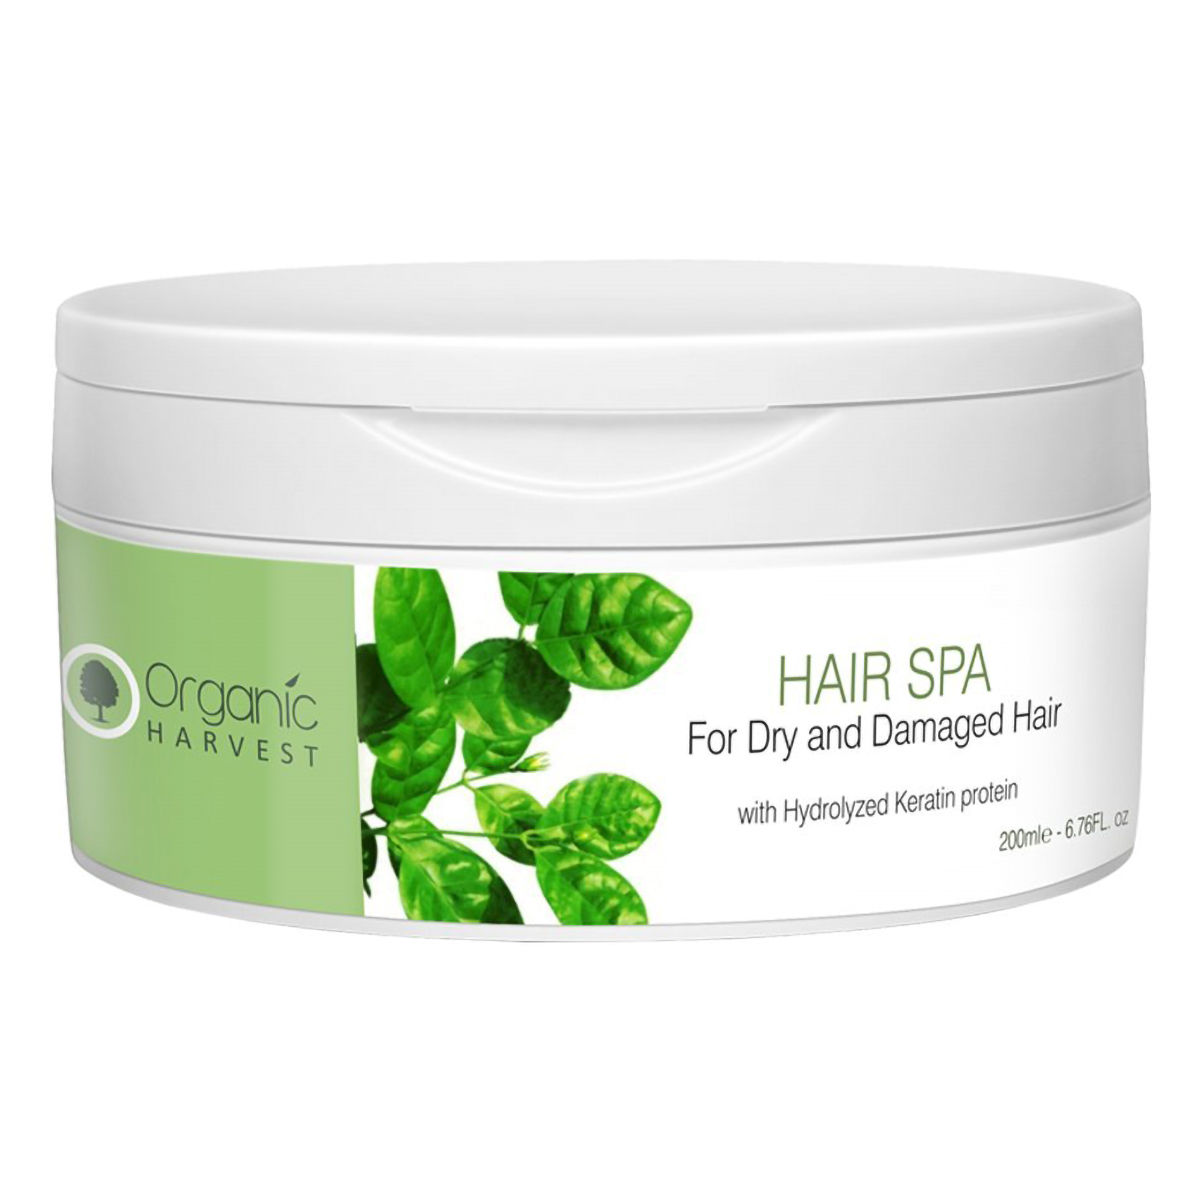 Buy Organic Harvest Hair Spa Dry & Damage Hair Cream, 200 gm Online